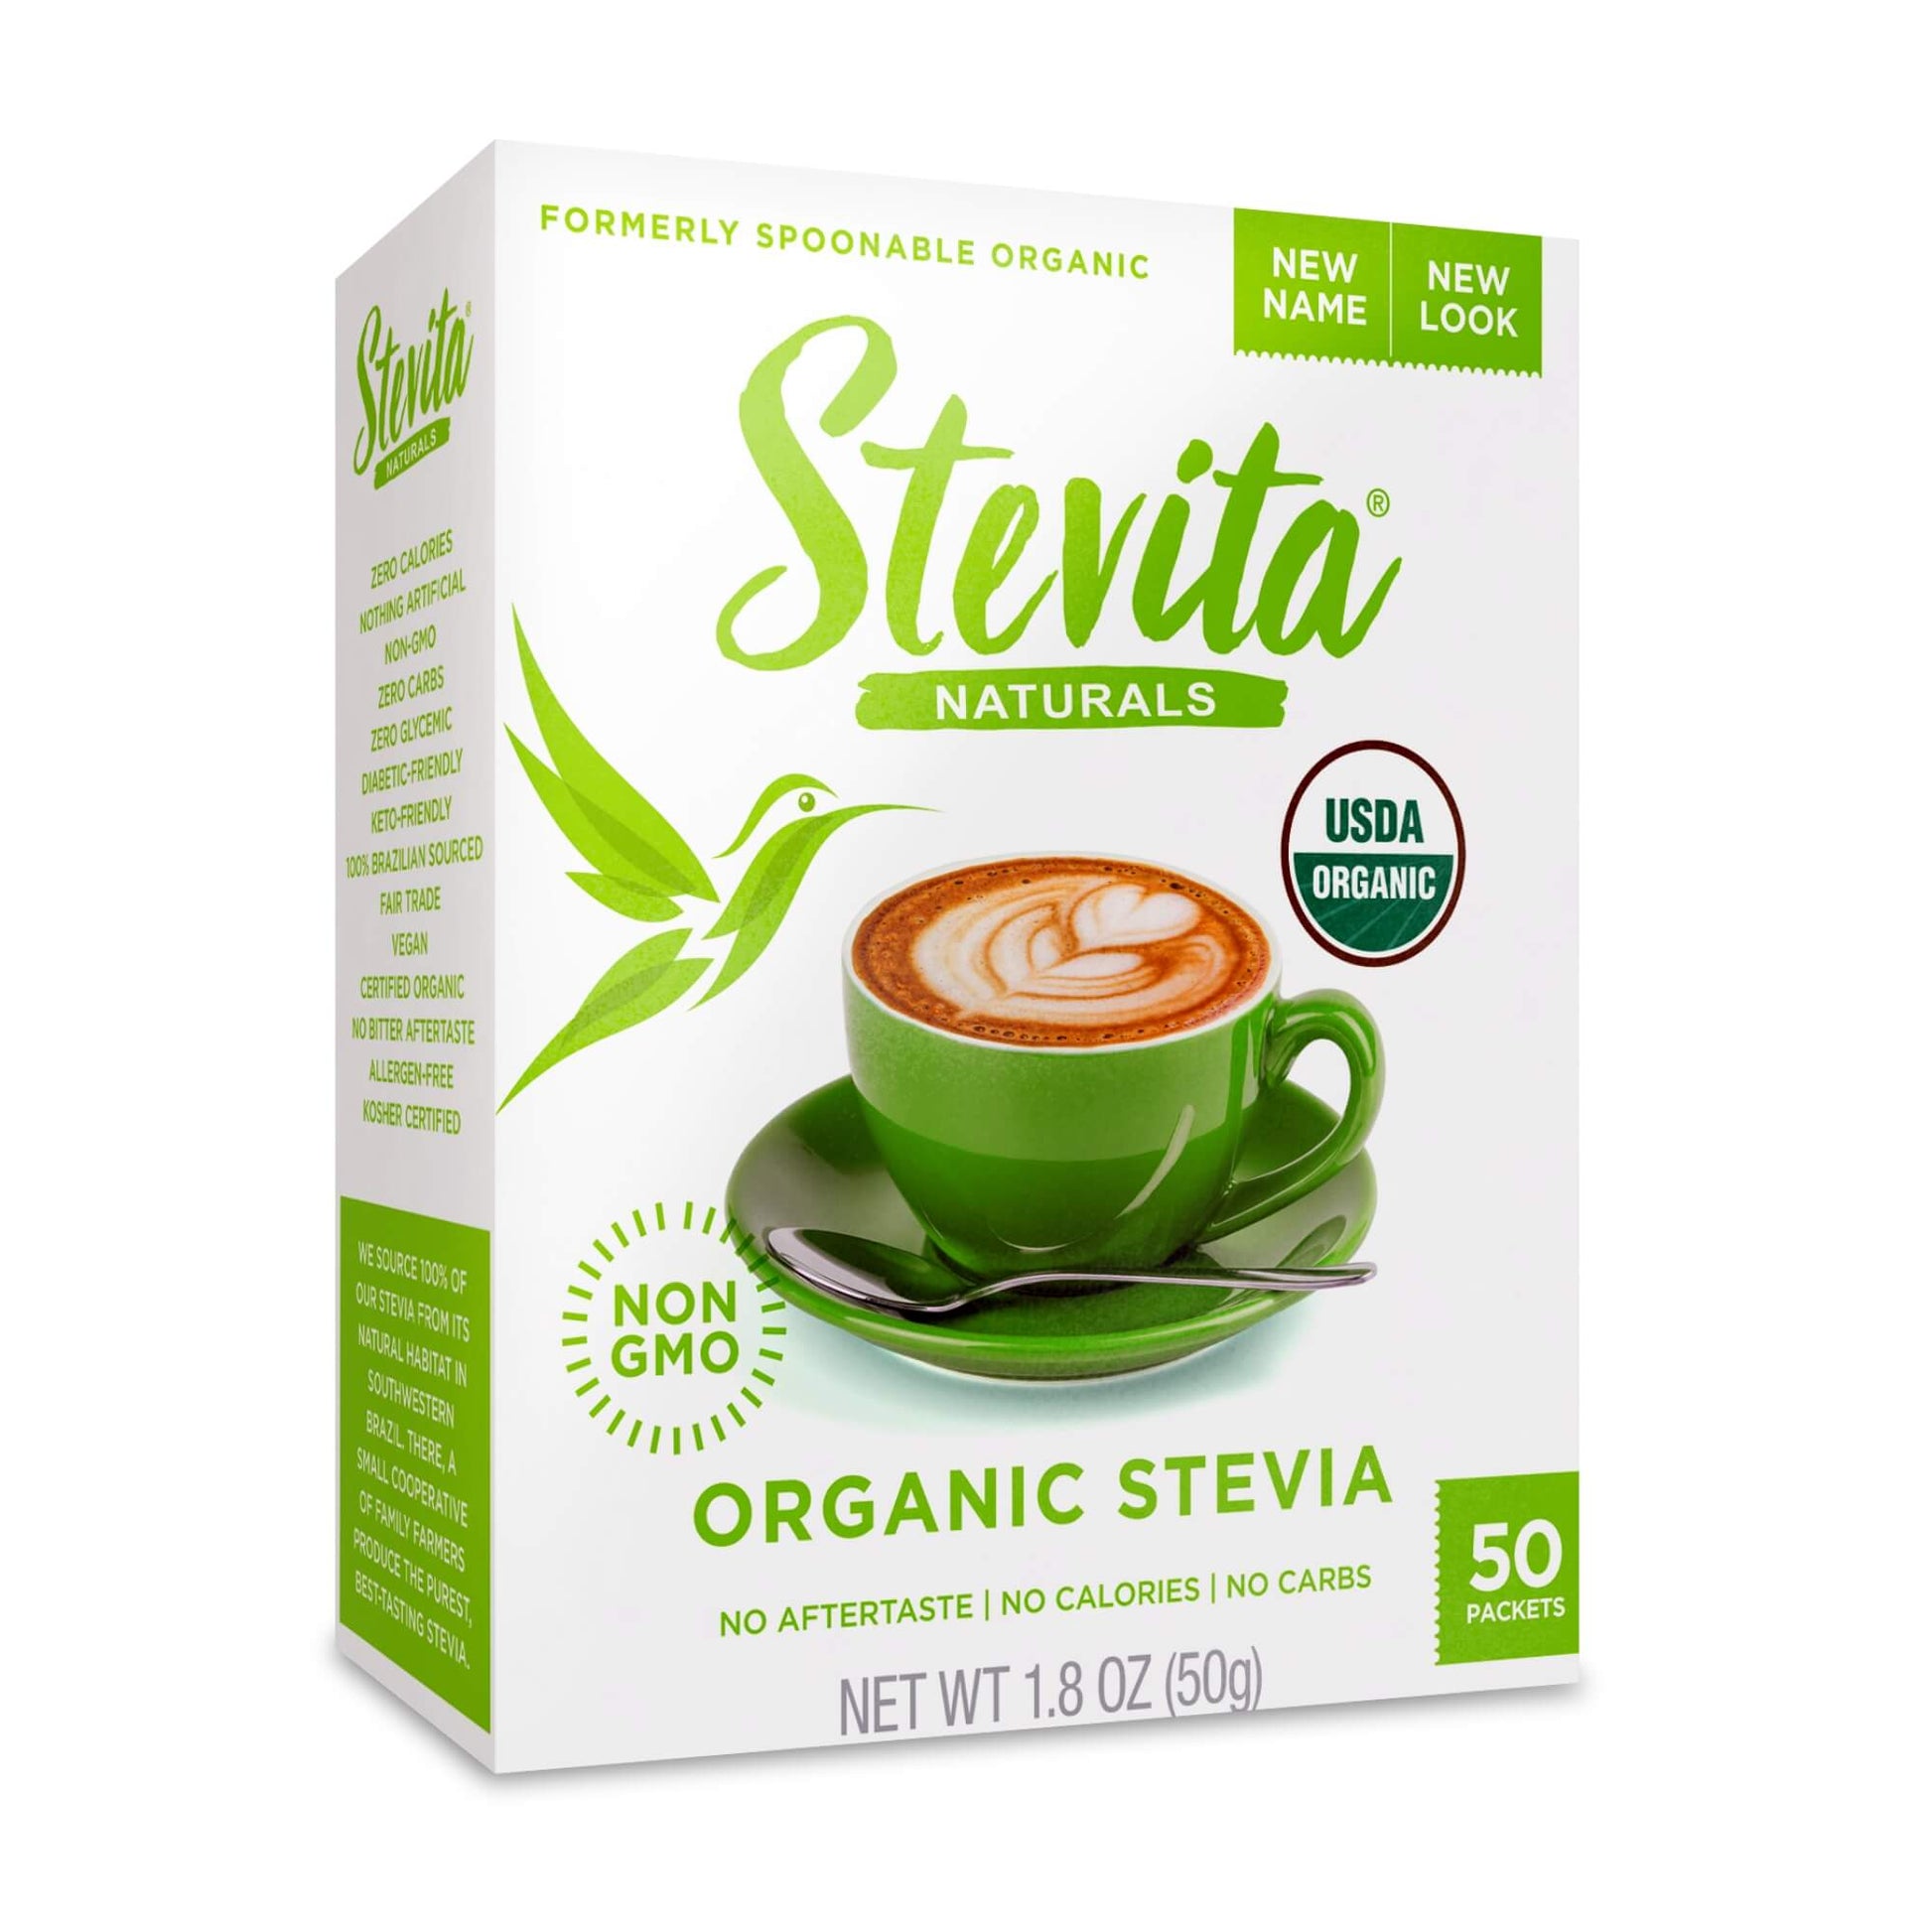 1-Stevita Original Organic Stevia Box 50 Packets, Sugar-Free Naturally Sweetened